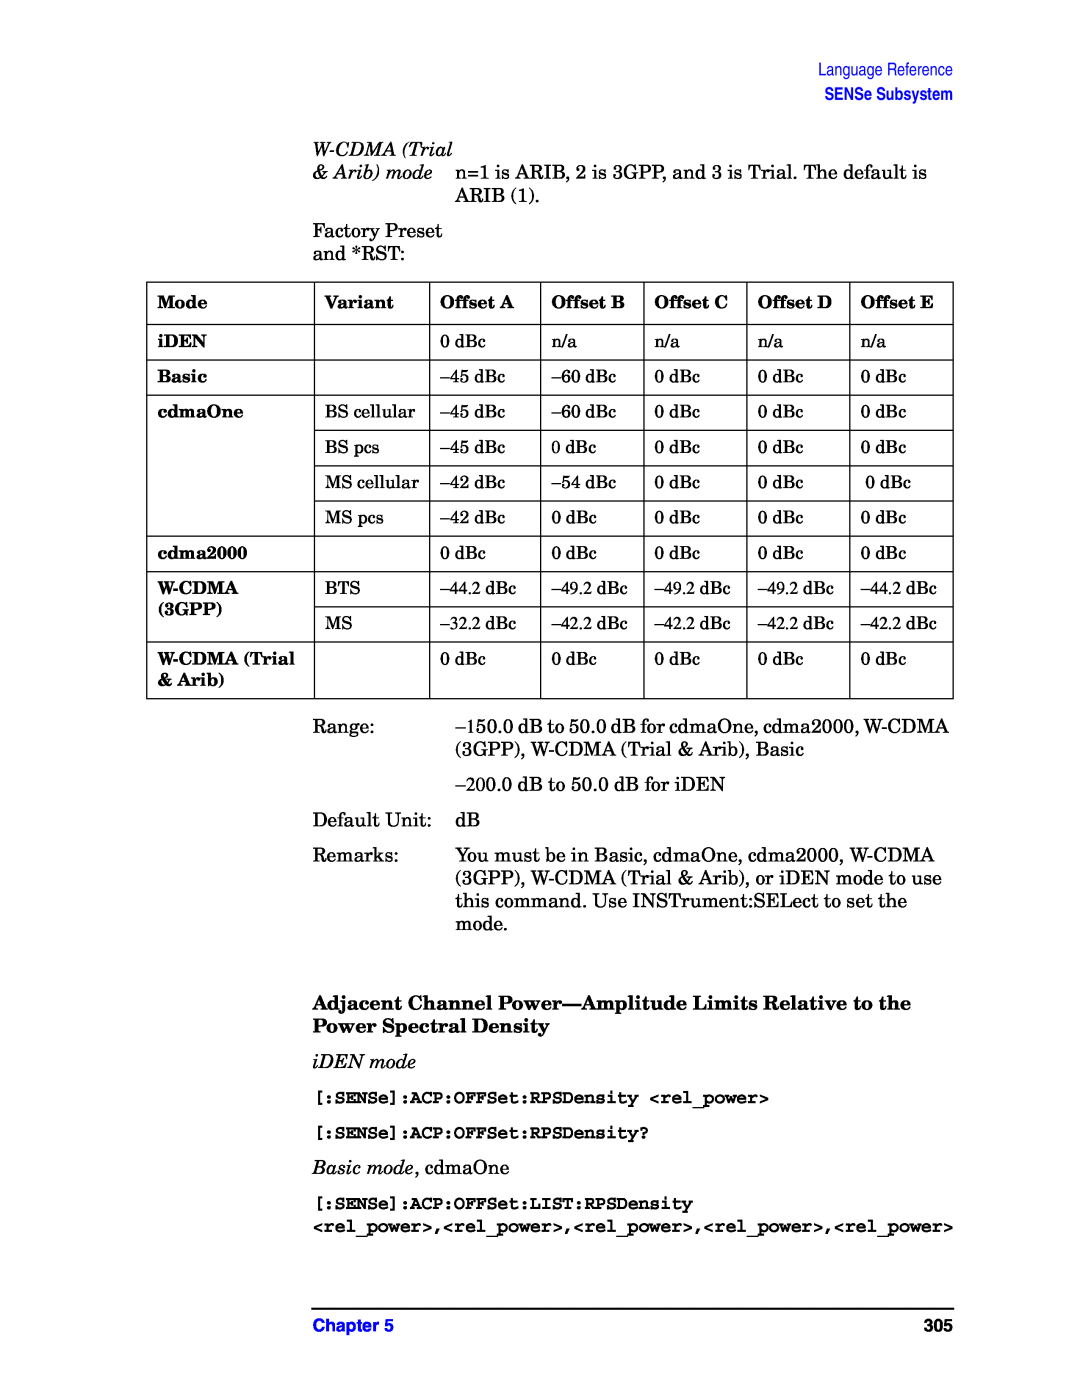 Agilent Technologies E4406A VSA Power Spectral Density, SENSe:ACP:OFFSet:RPSDensity <rel_power>, W-CDMATrial, iDEN mode 